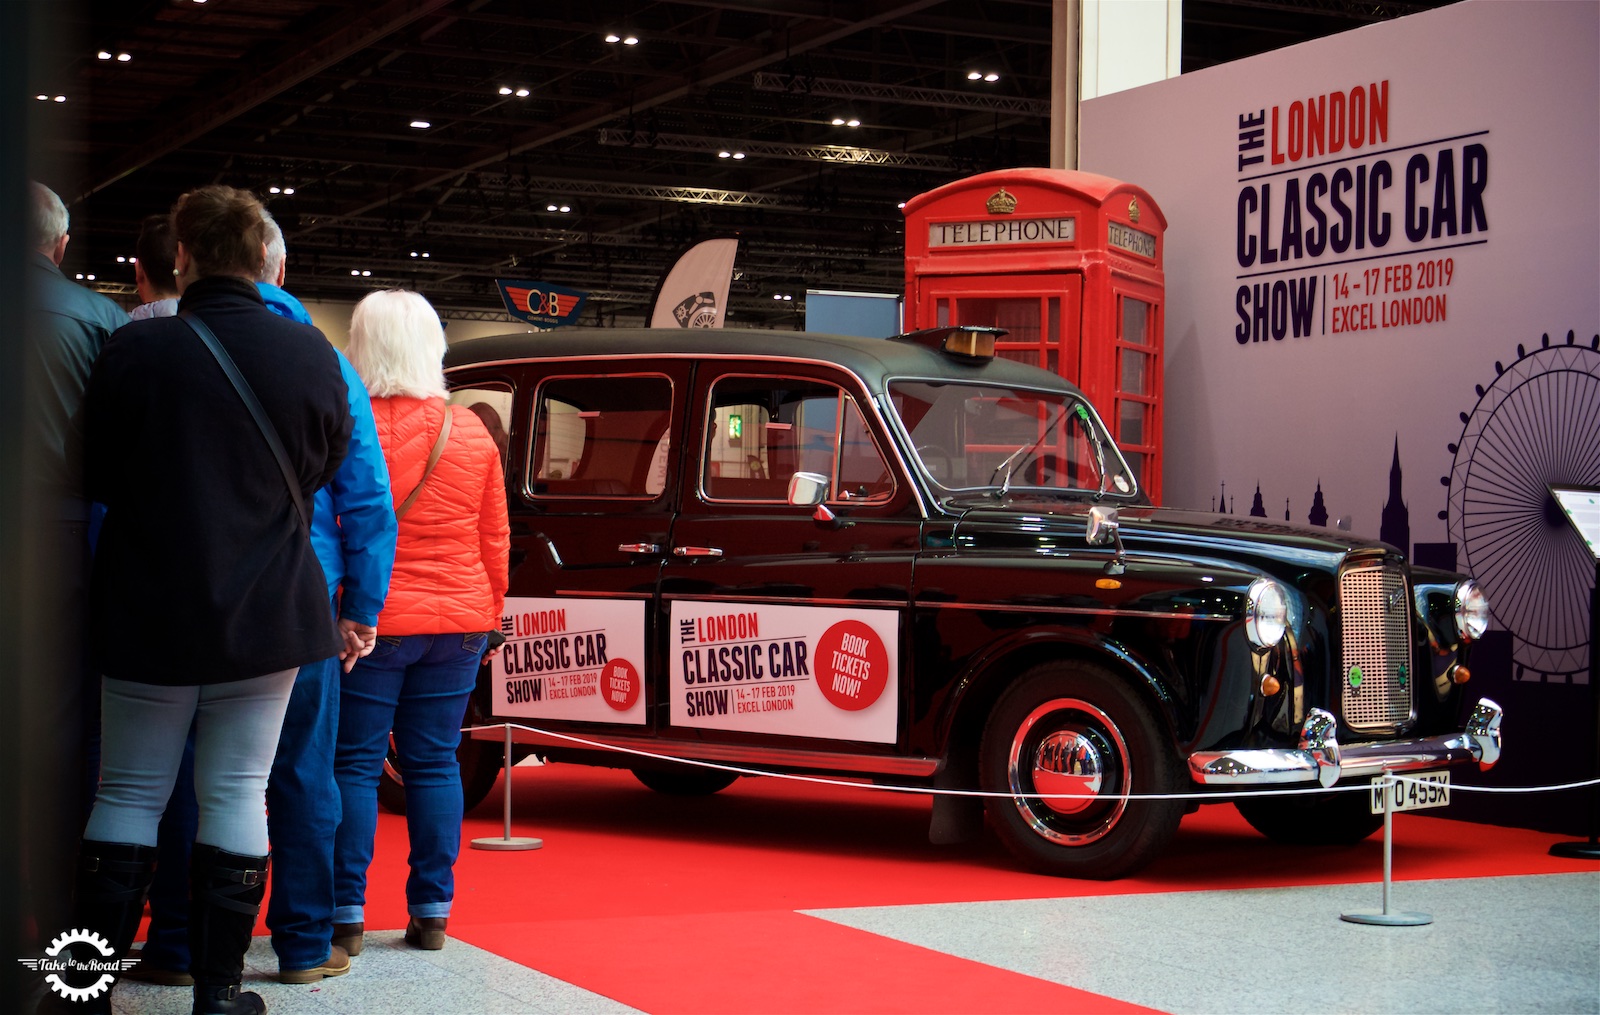 London Classic Car Show Highlights 2019